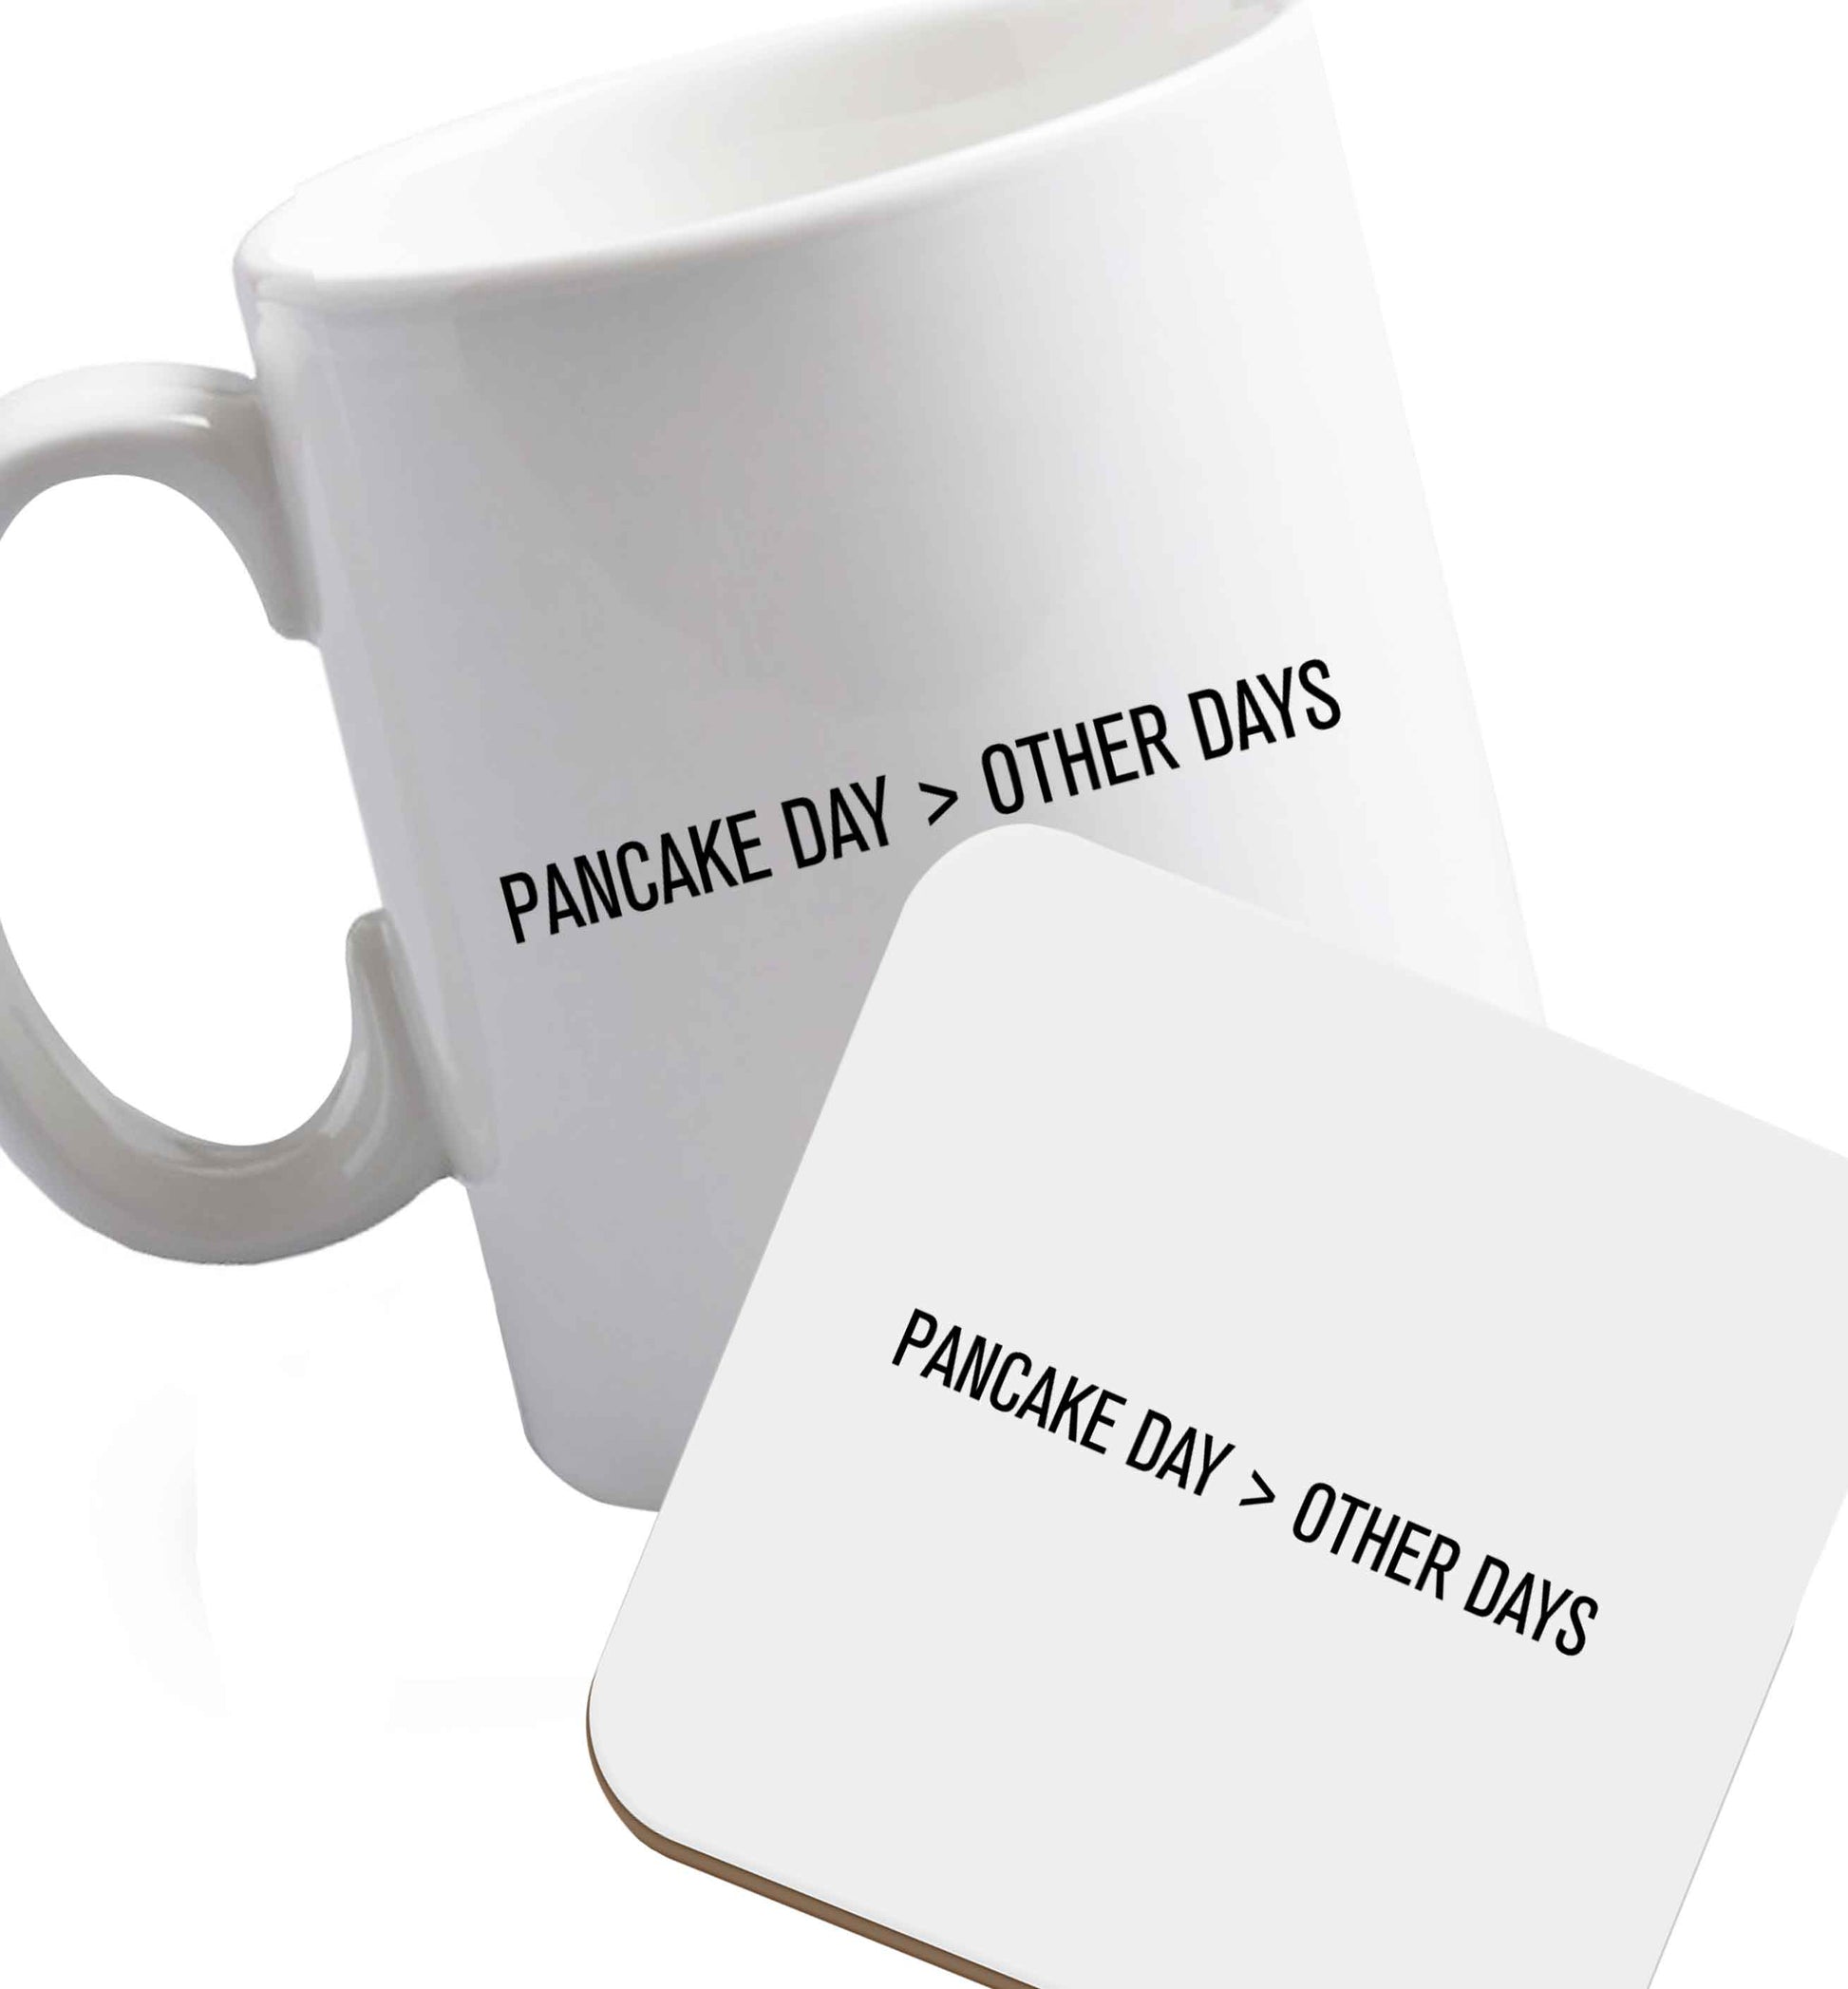 10 oz Pancake Day > Other Days ceramic mug and coaster set right handed